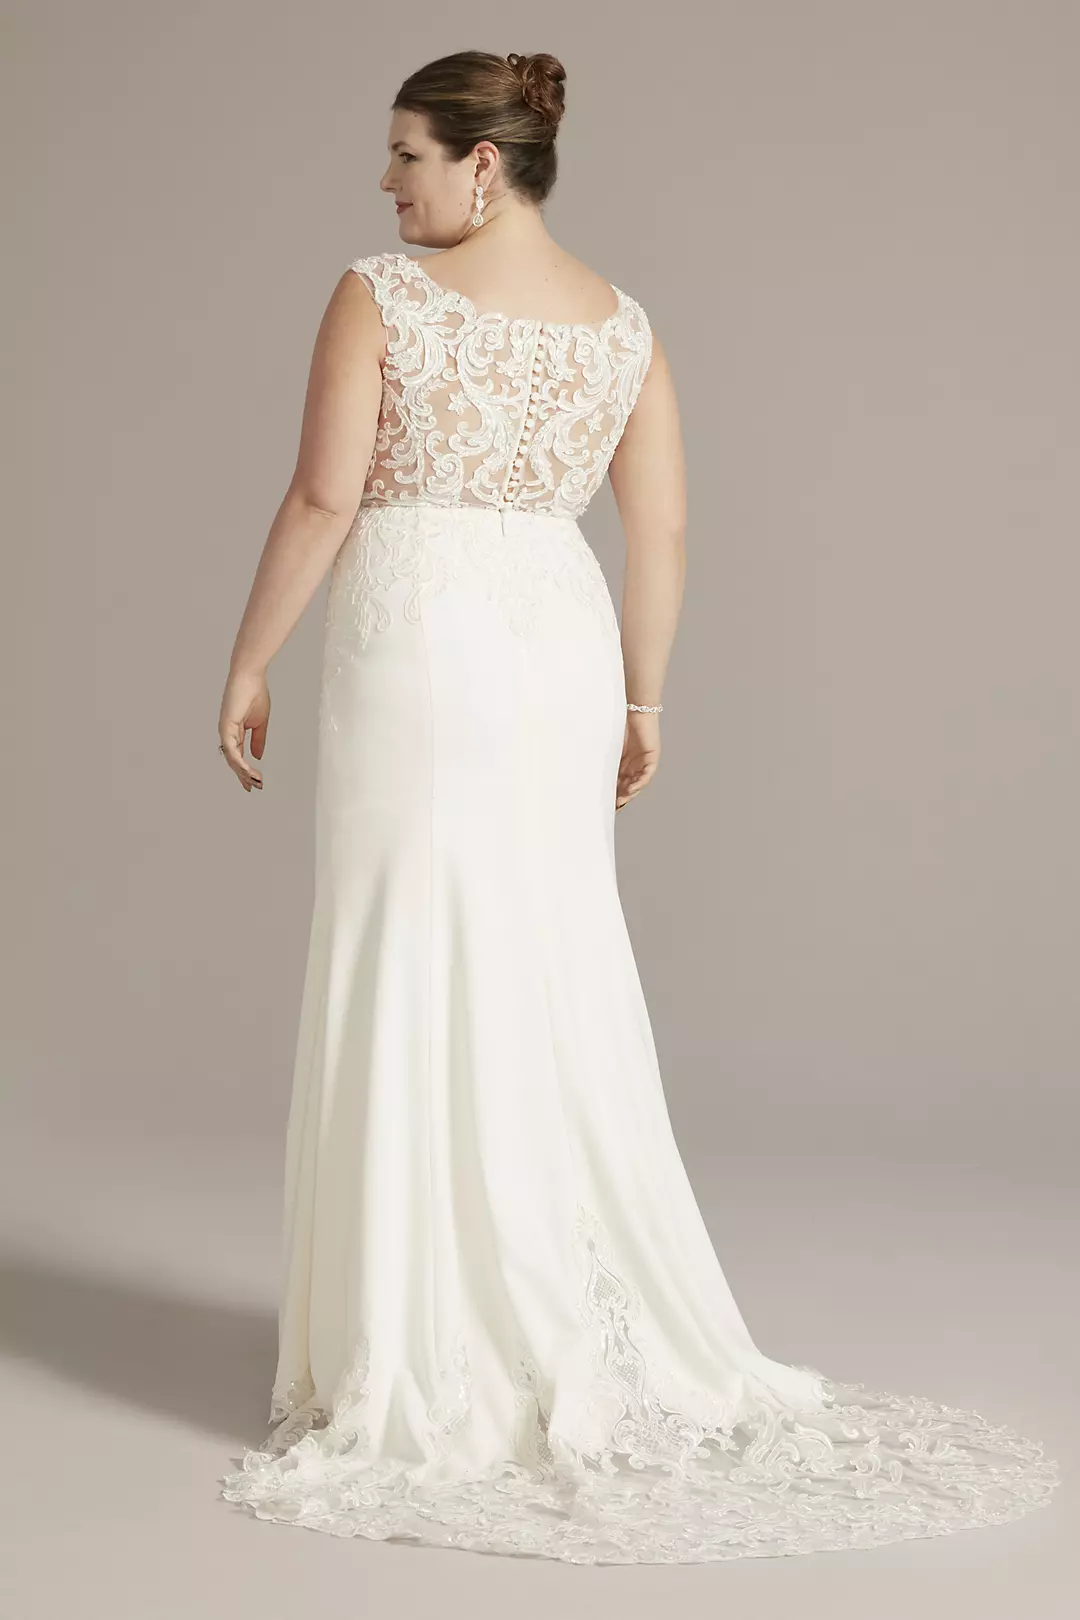 Applique Mermaid Wedding Dress with Lace Train | David's Bridal